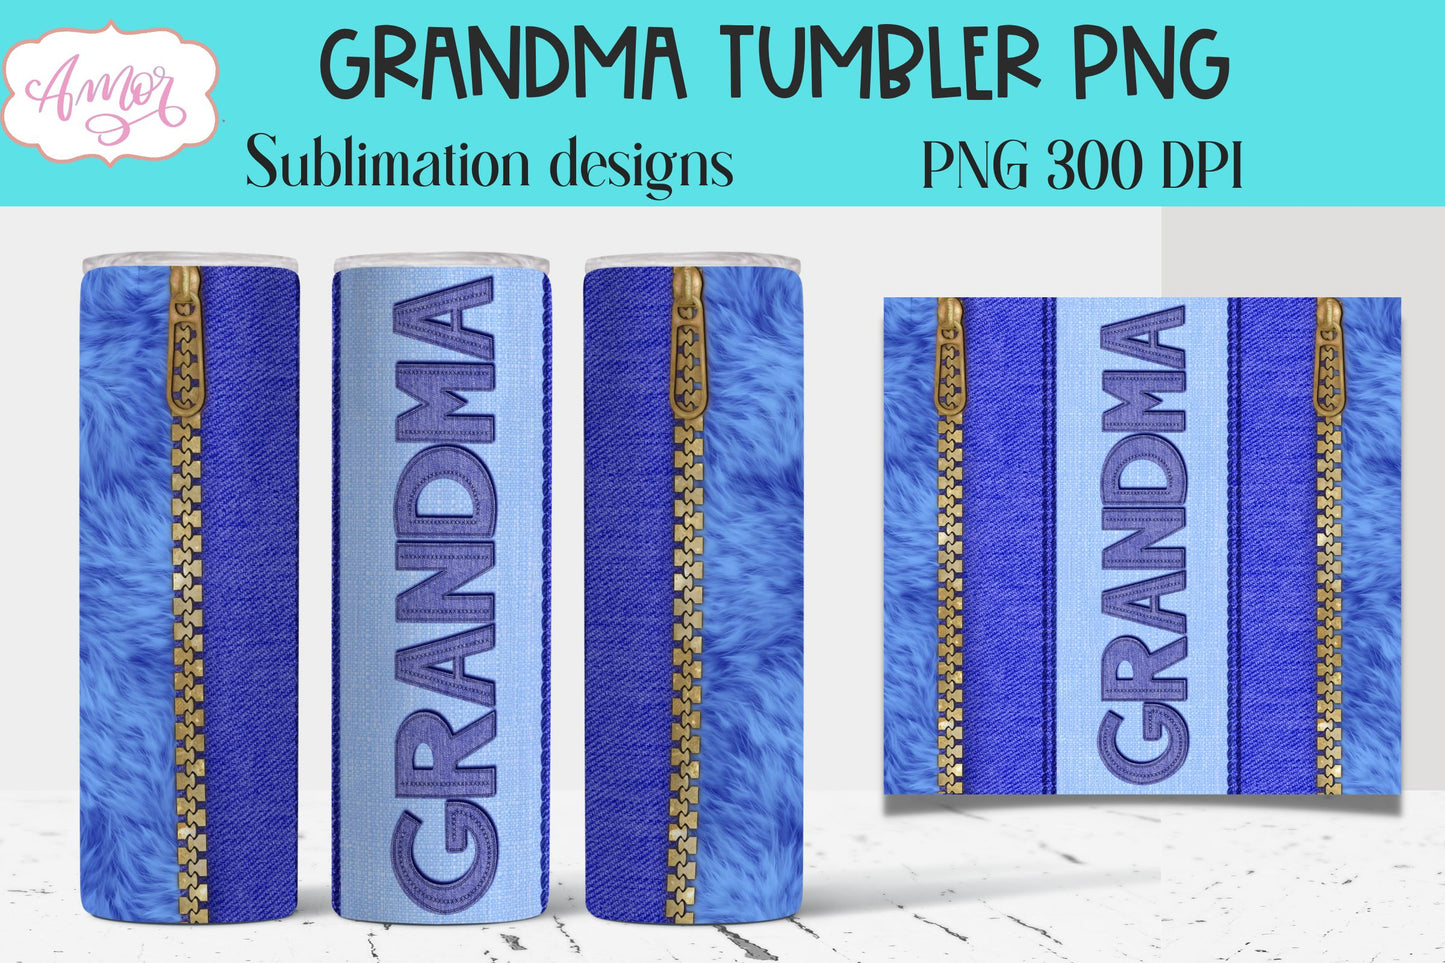 Grandma Tumbler wrap PNG for sublimation denim effect